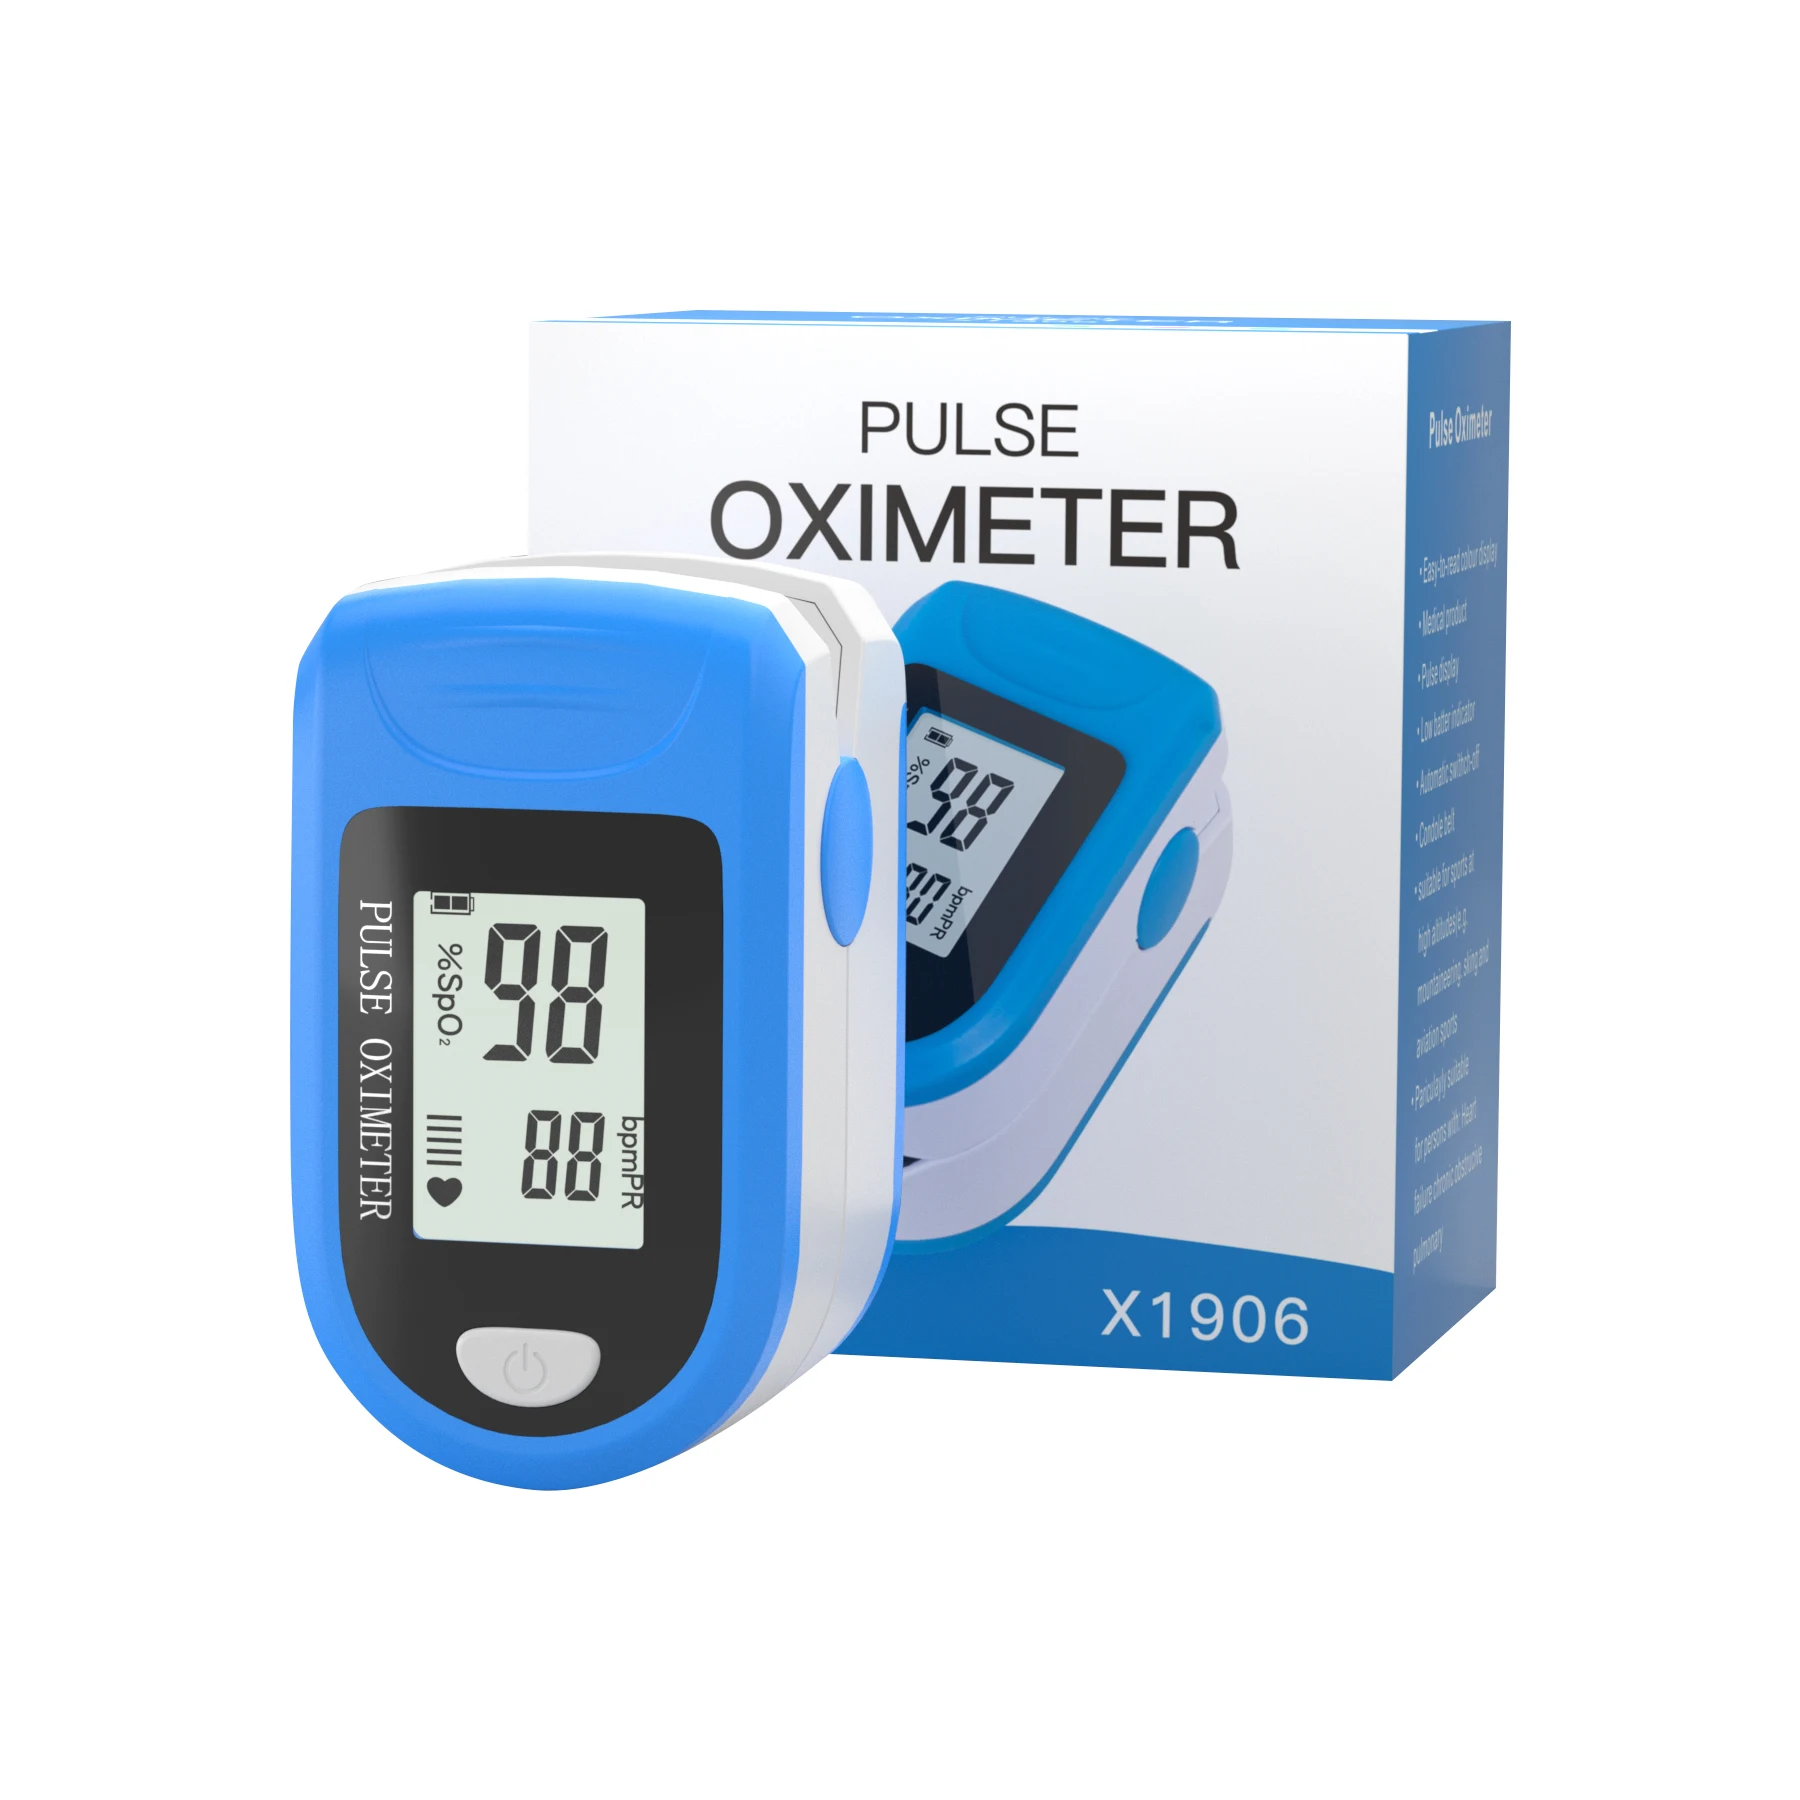 
X1906 LCD display Fingertip Pulse Oximeter Blood Oxygen SpO2 saturation monitor oximetro 